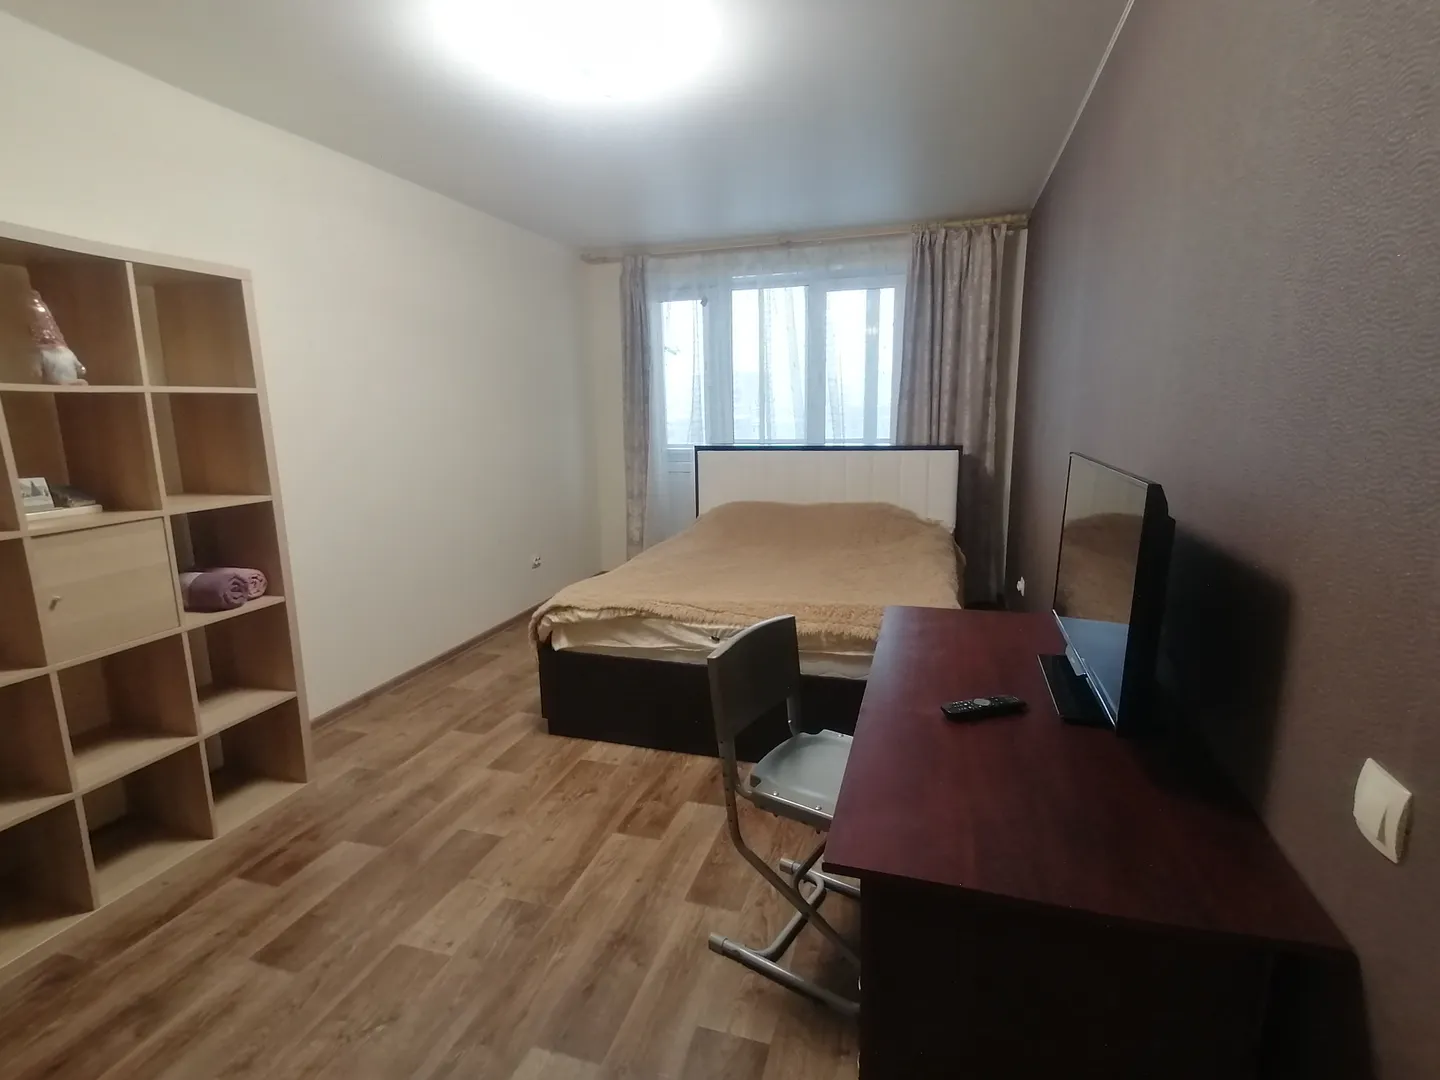 "Комфортная и уютная" 1-комнатная квартира в Кондопоге - фото 1